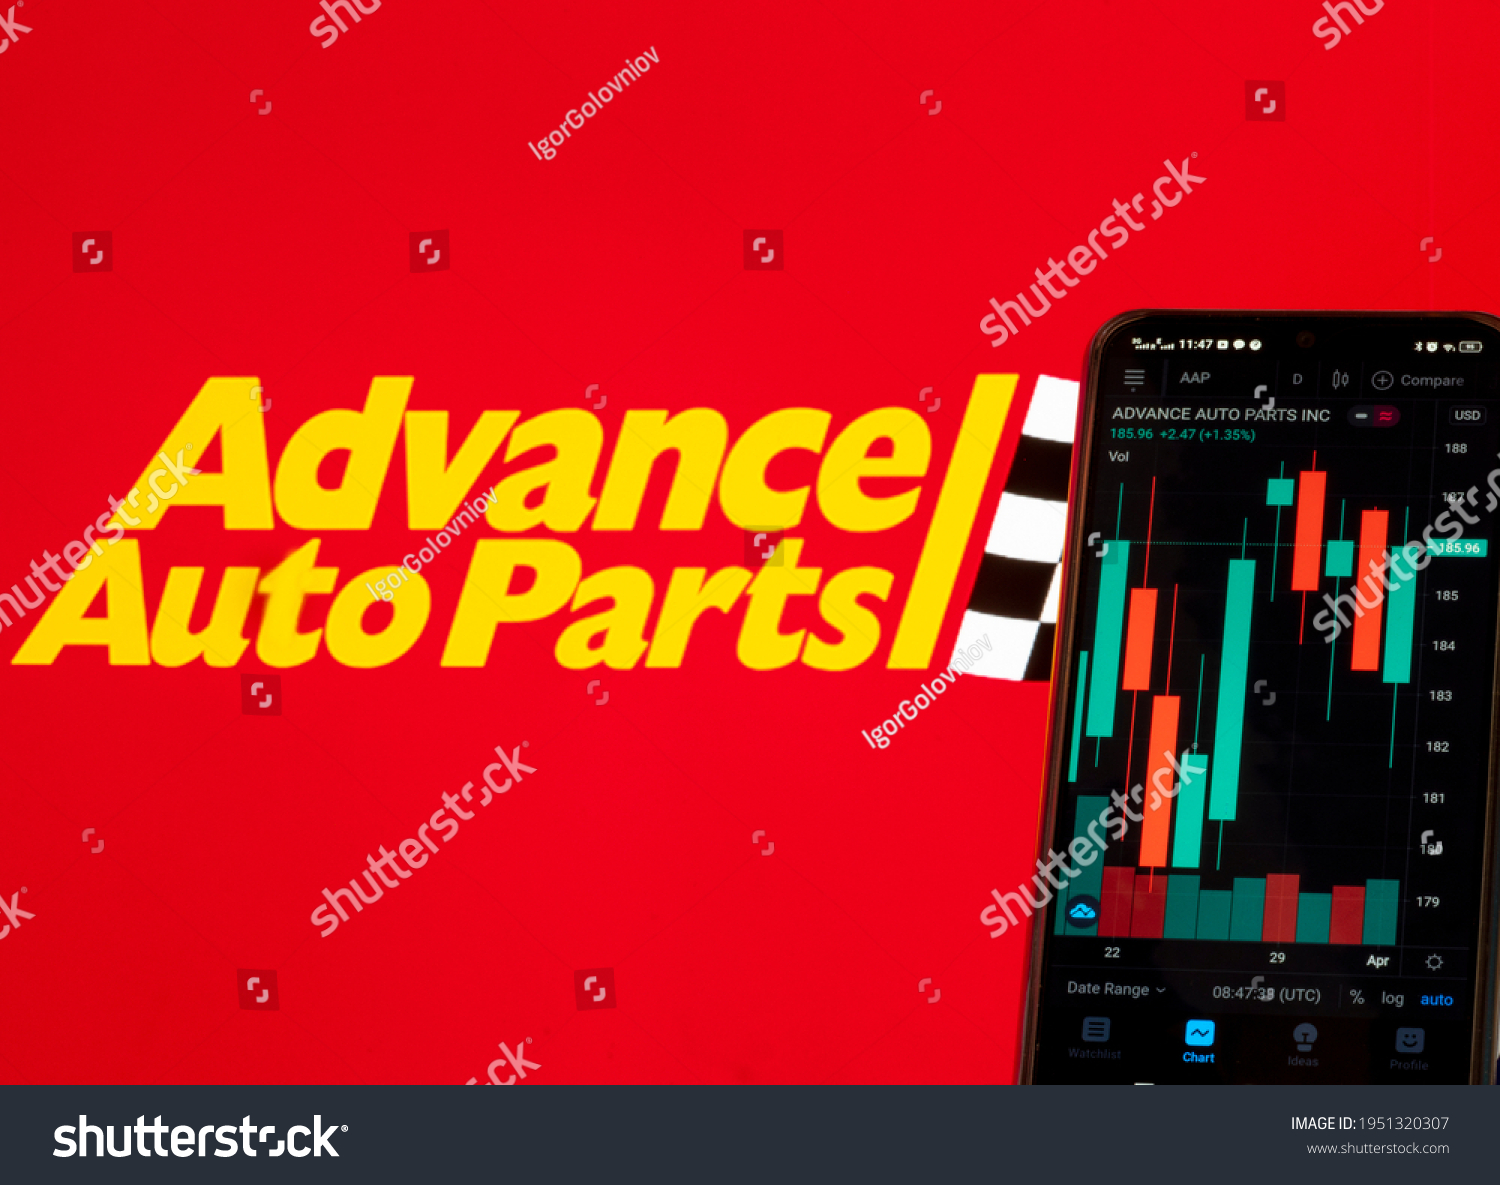 advance auto parts logo image